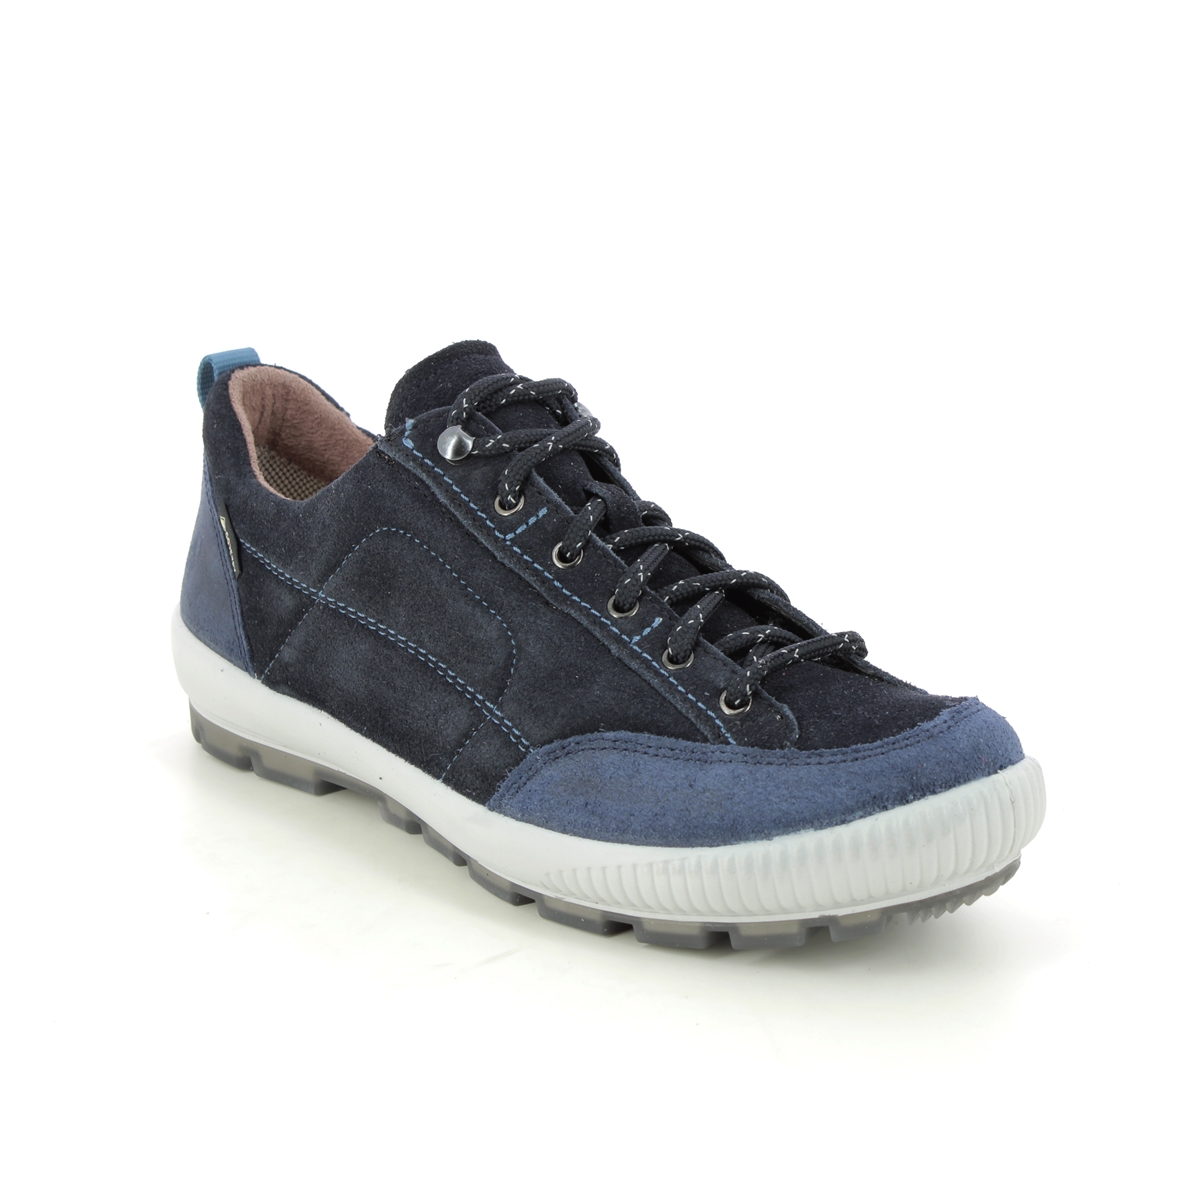 Legero Tanaro Trek Gtx Navy Womens Walking Shoes 2000210-8000 In Size 6.5 In Plain Navy